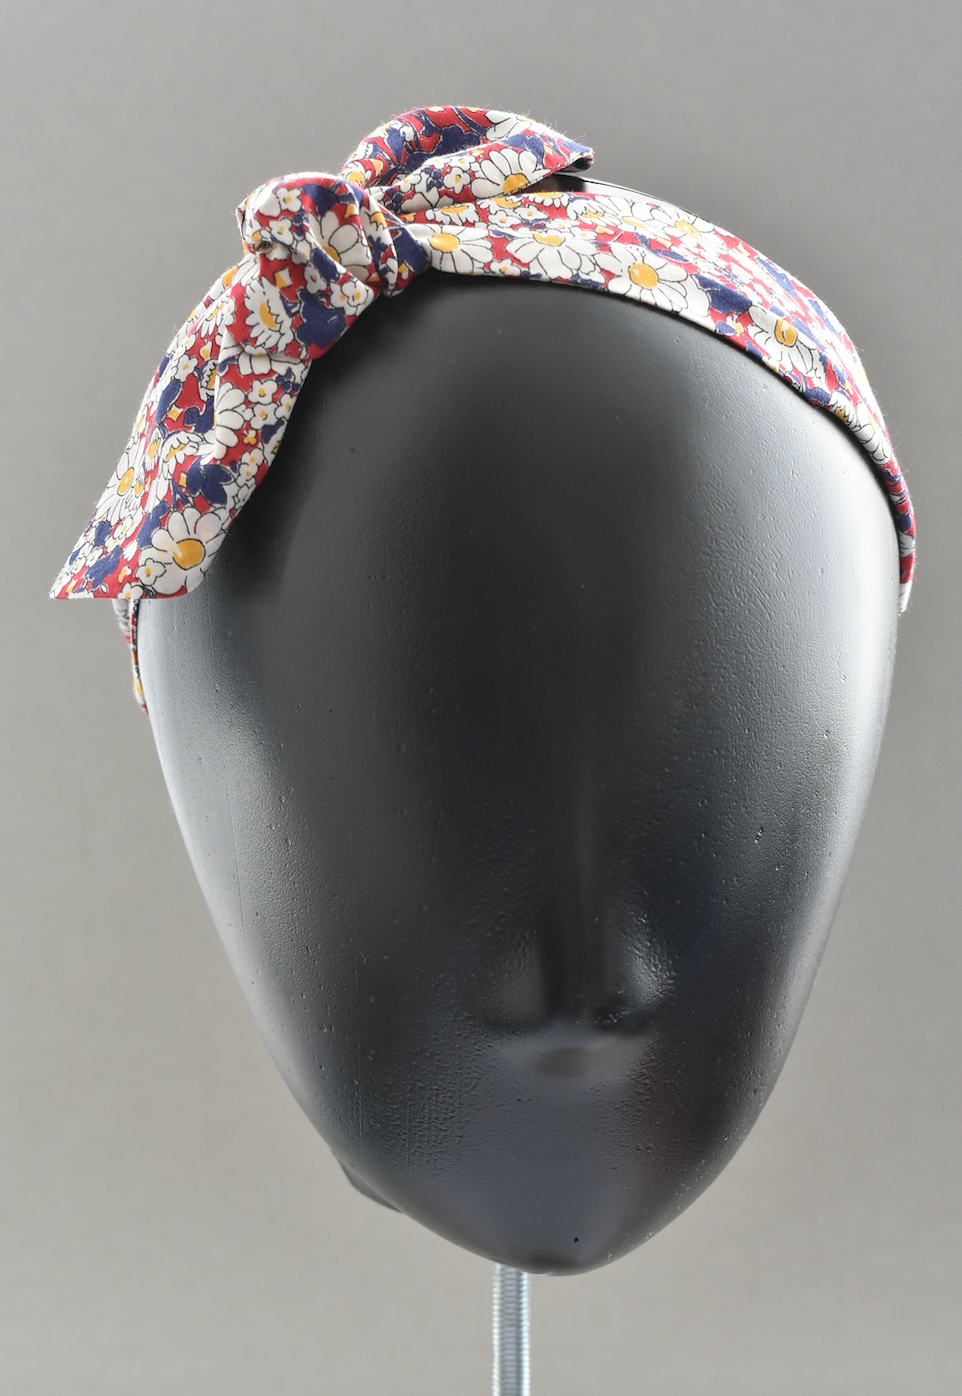 Ladies Knot hairband - Vintage Liberty of London Daisy